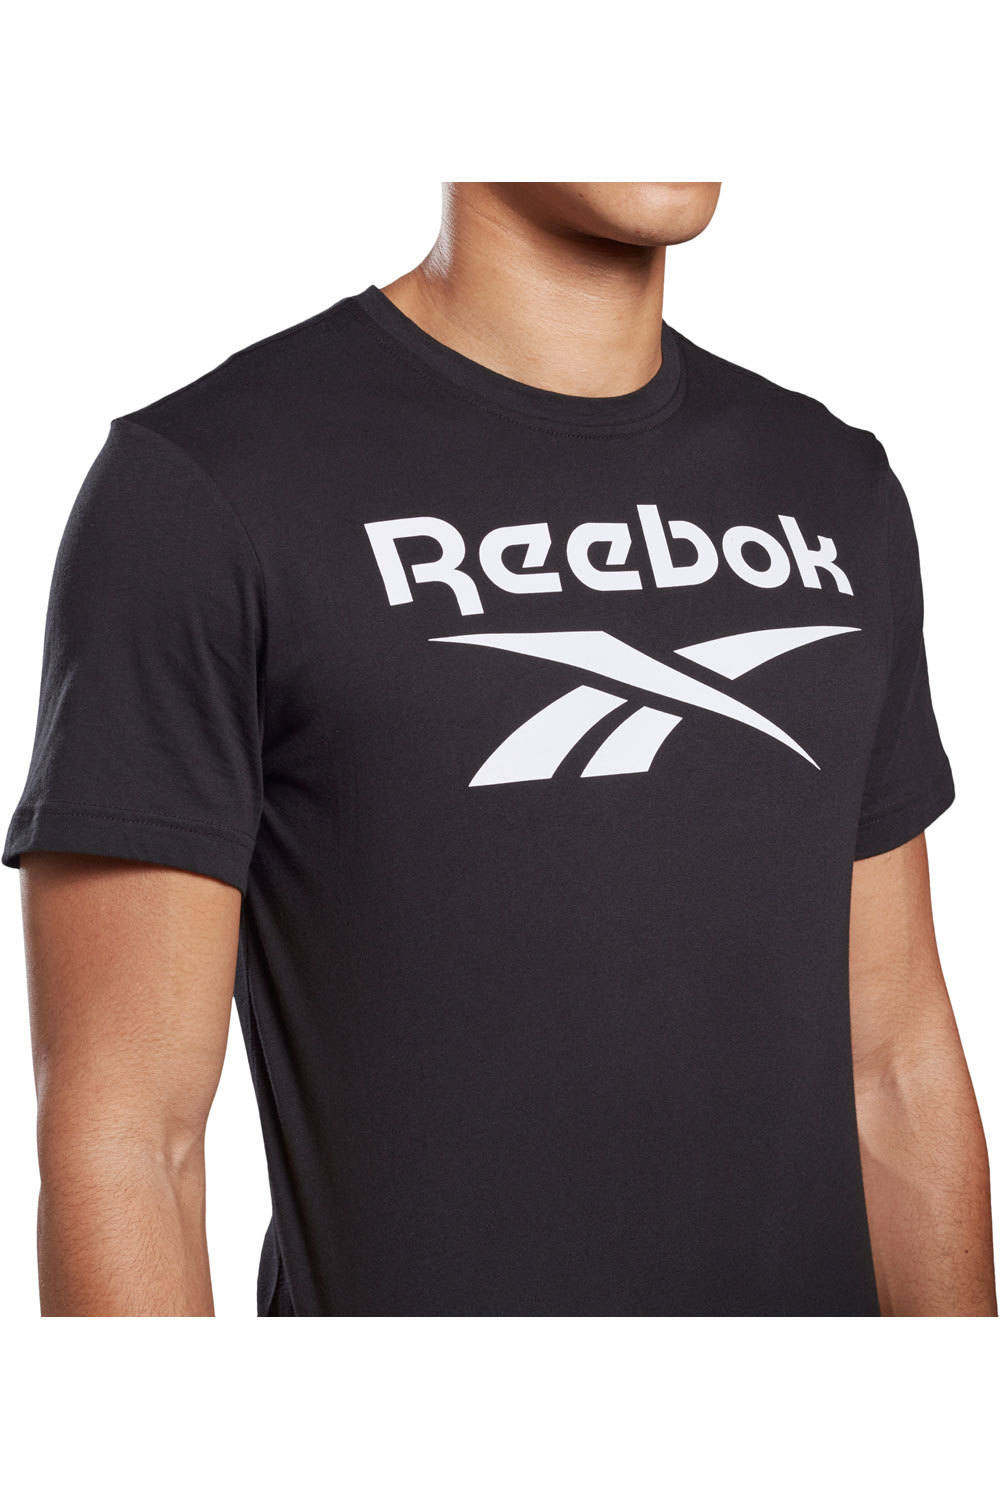 Reebok camiseta manga corta hombre RI Big Logo Tee vista detalle